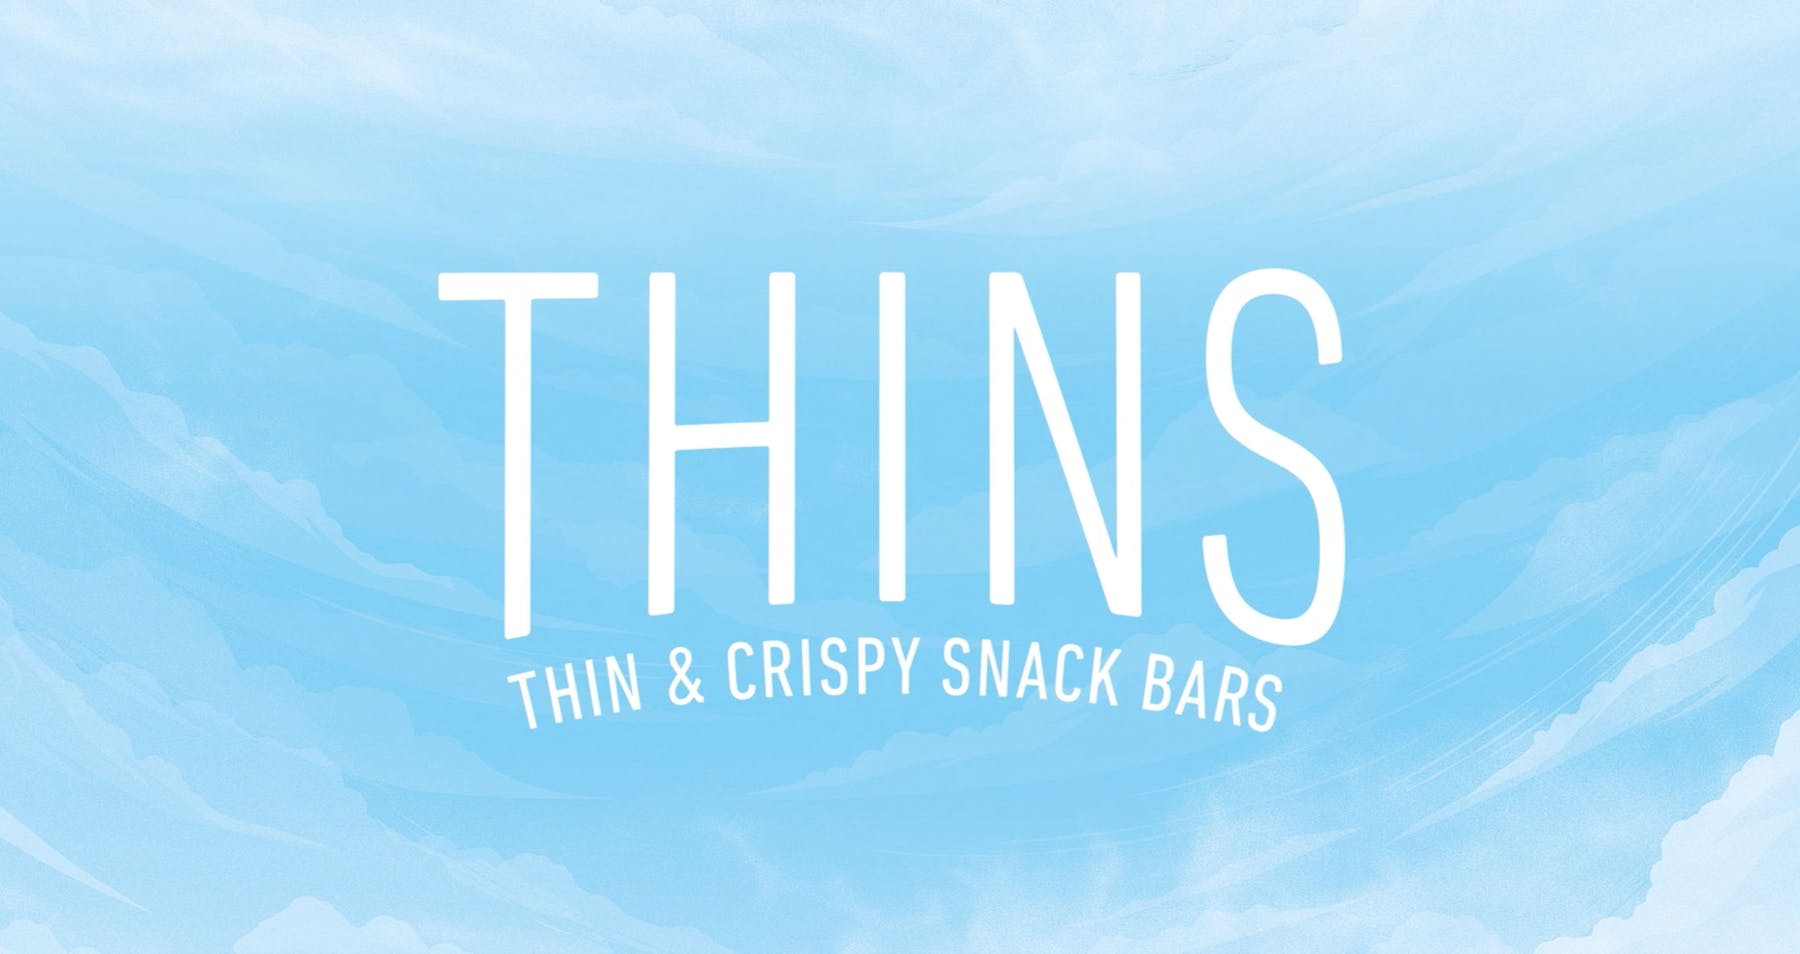 Clif bar thins crispy snack bars